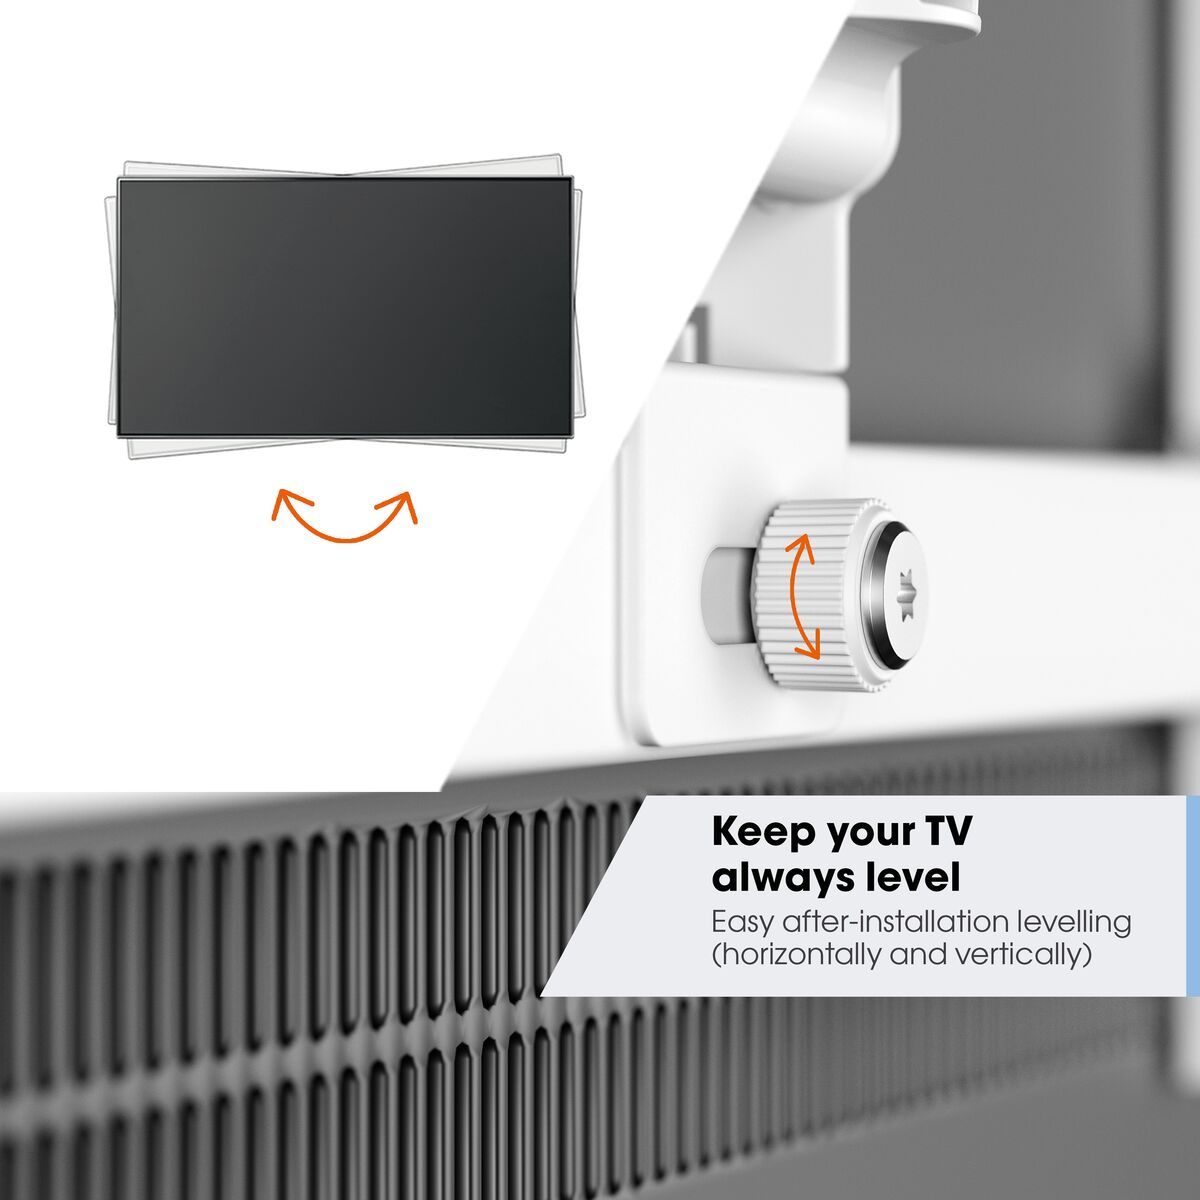 Vogel's TVM 3245 Full-Motion TV Wall Mount (white) - Suitable for 19 up to 43 inch TVs - Full motion (up to 180°) swivel - Tilt up to 20° - USP